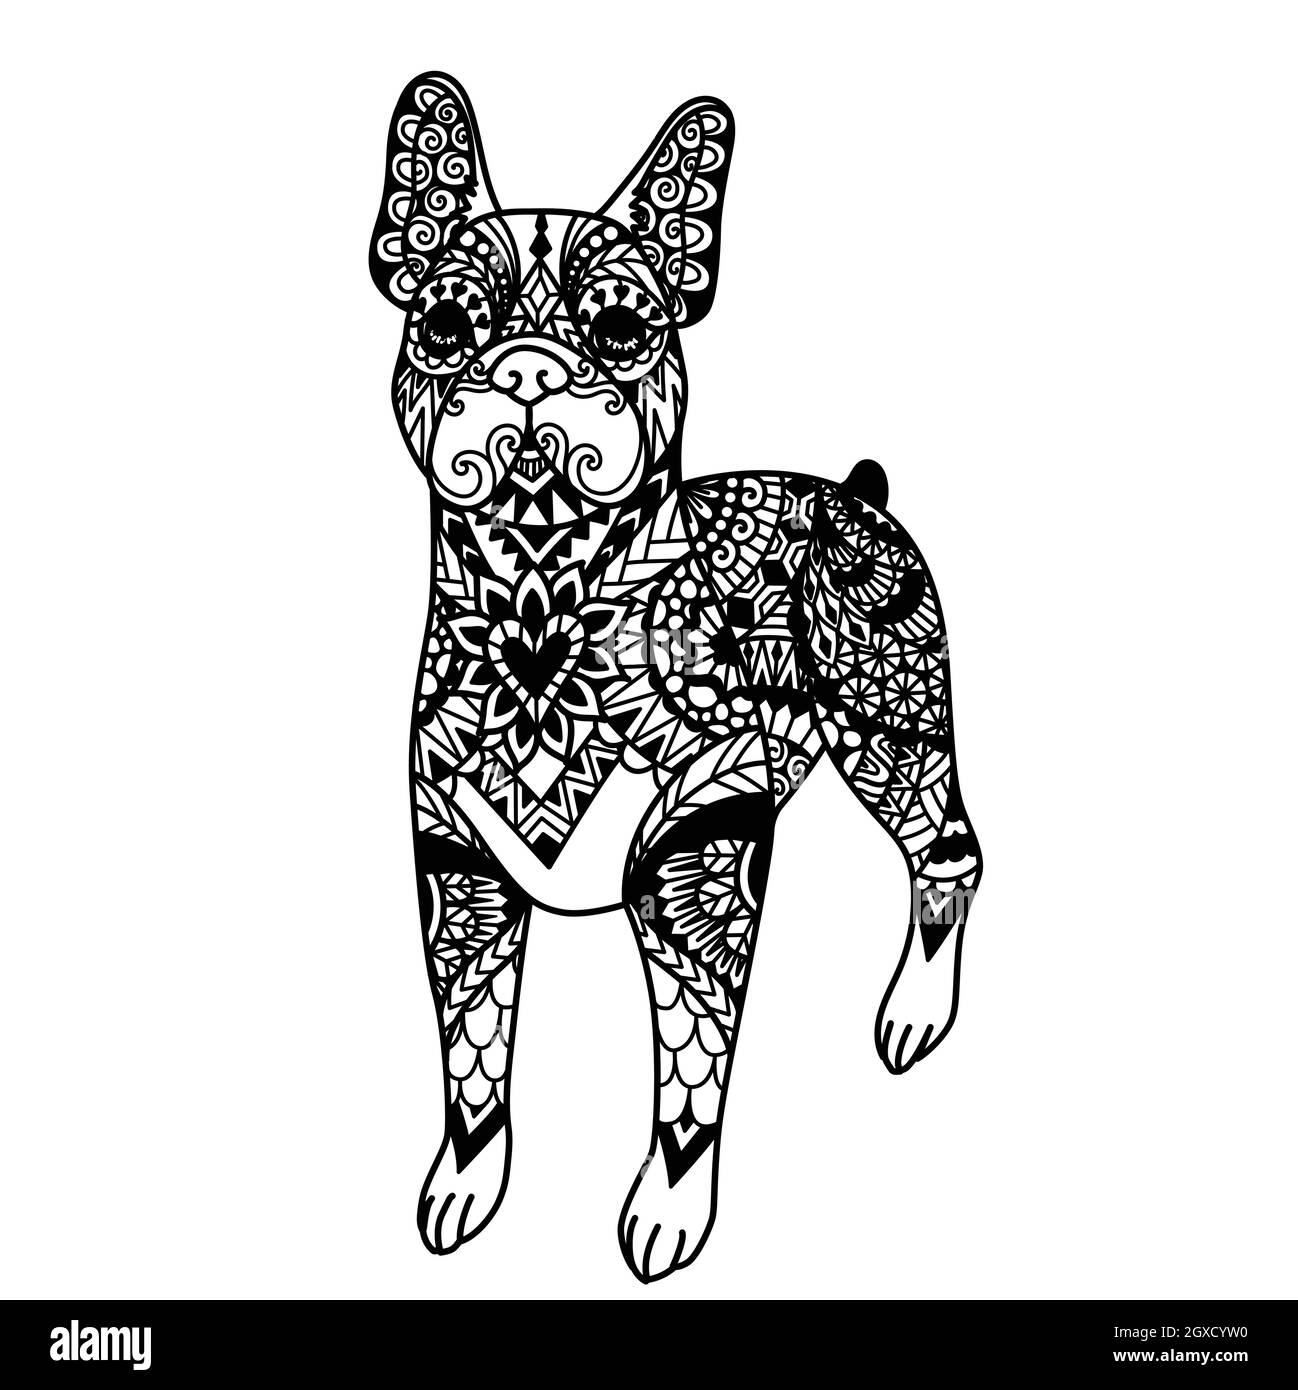 Mandala Boston Terrier Hund zum Drucken, Gravur, Laserschnitt, Malbuch und so weiter. Vektorgrafik Stock Vektor